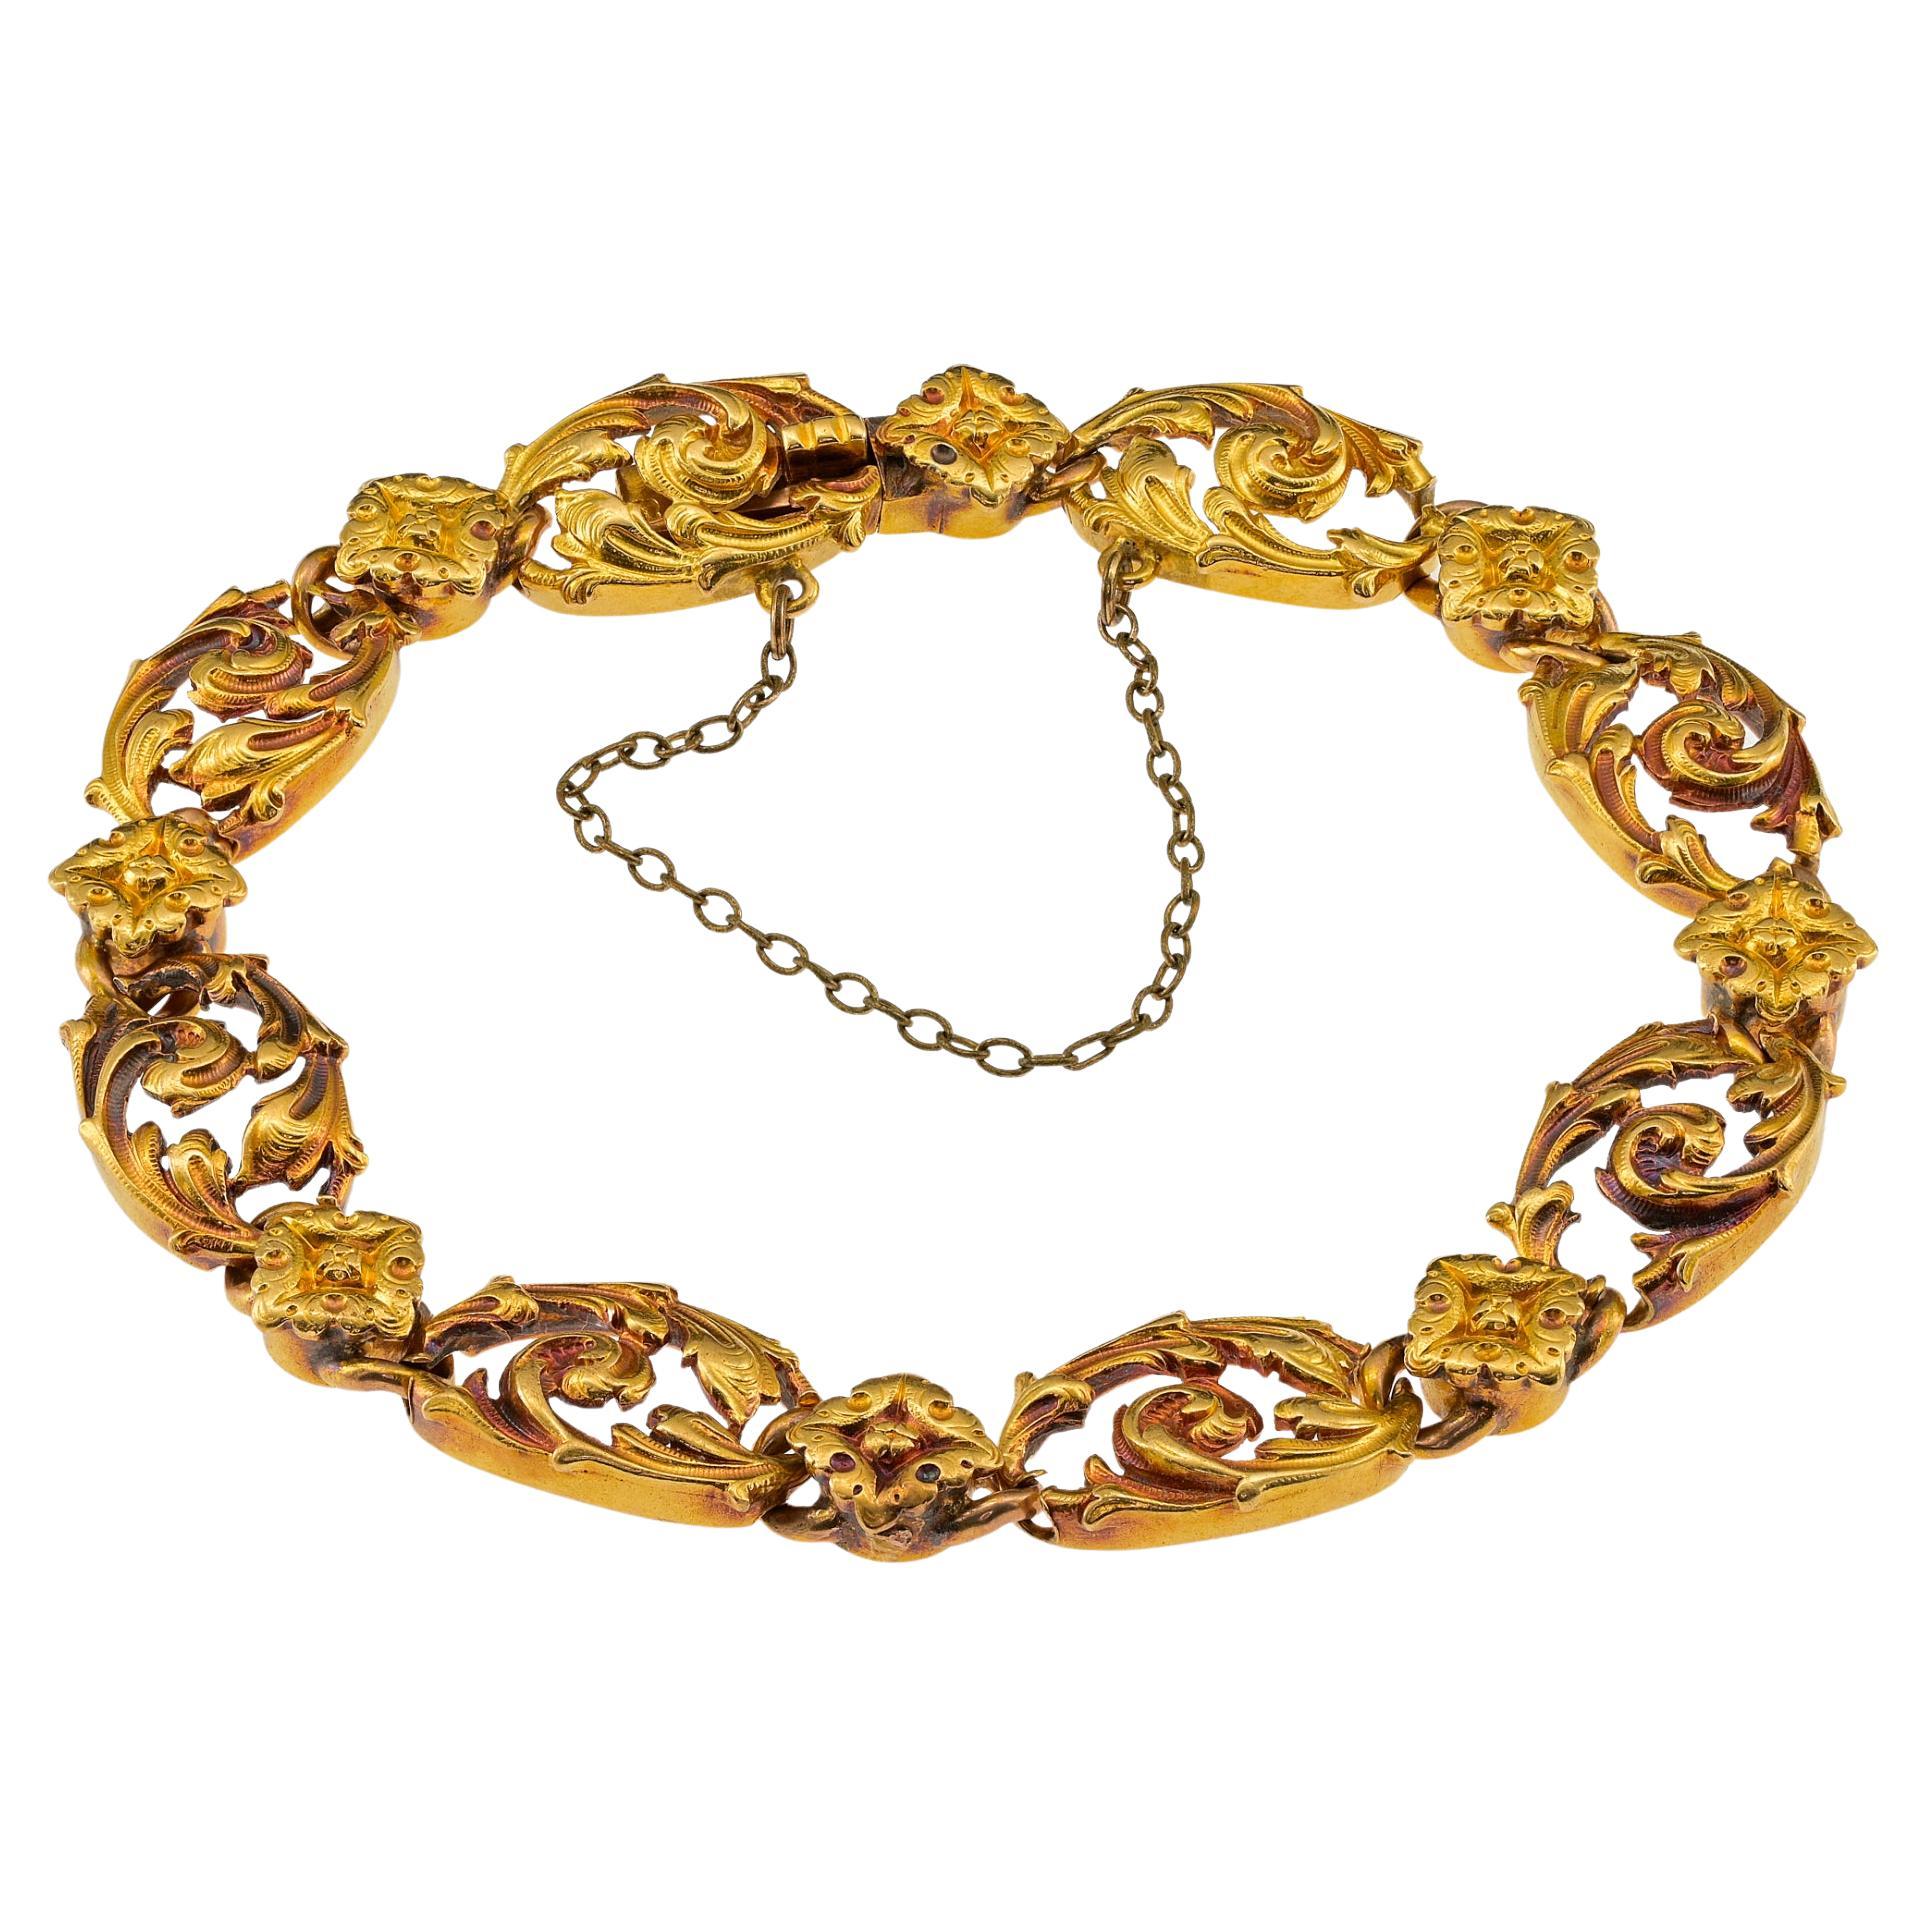 French Art Nouveau 18 Kt gold carved bracelet